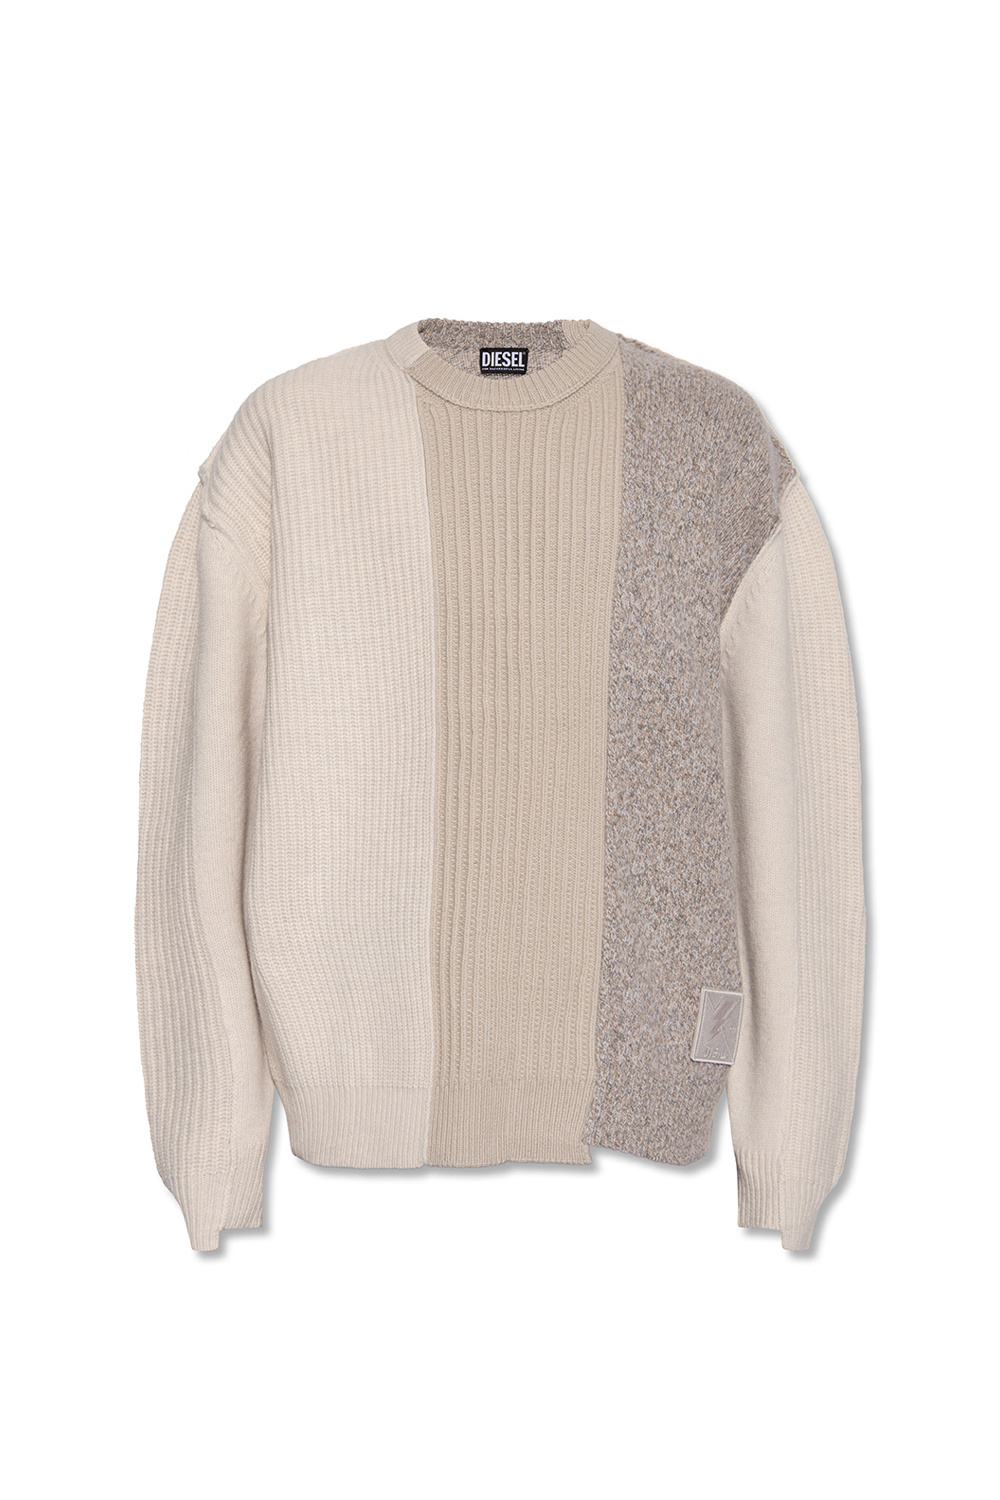 Diesel Knit sweater | Men's Clothing | Vitkac